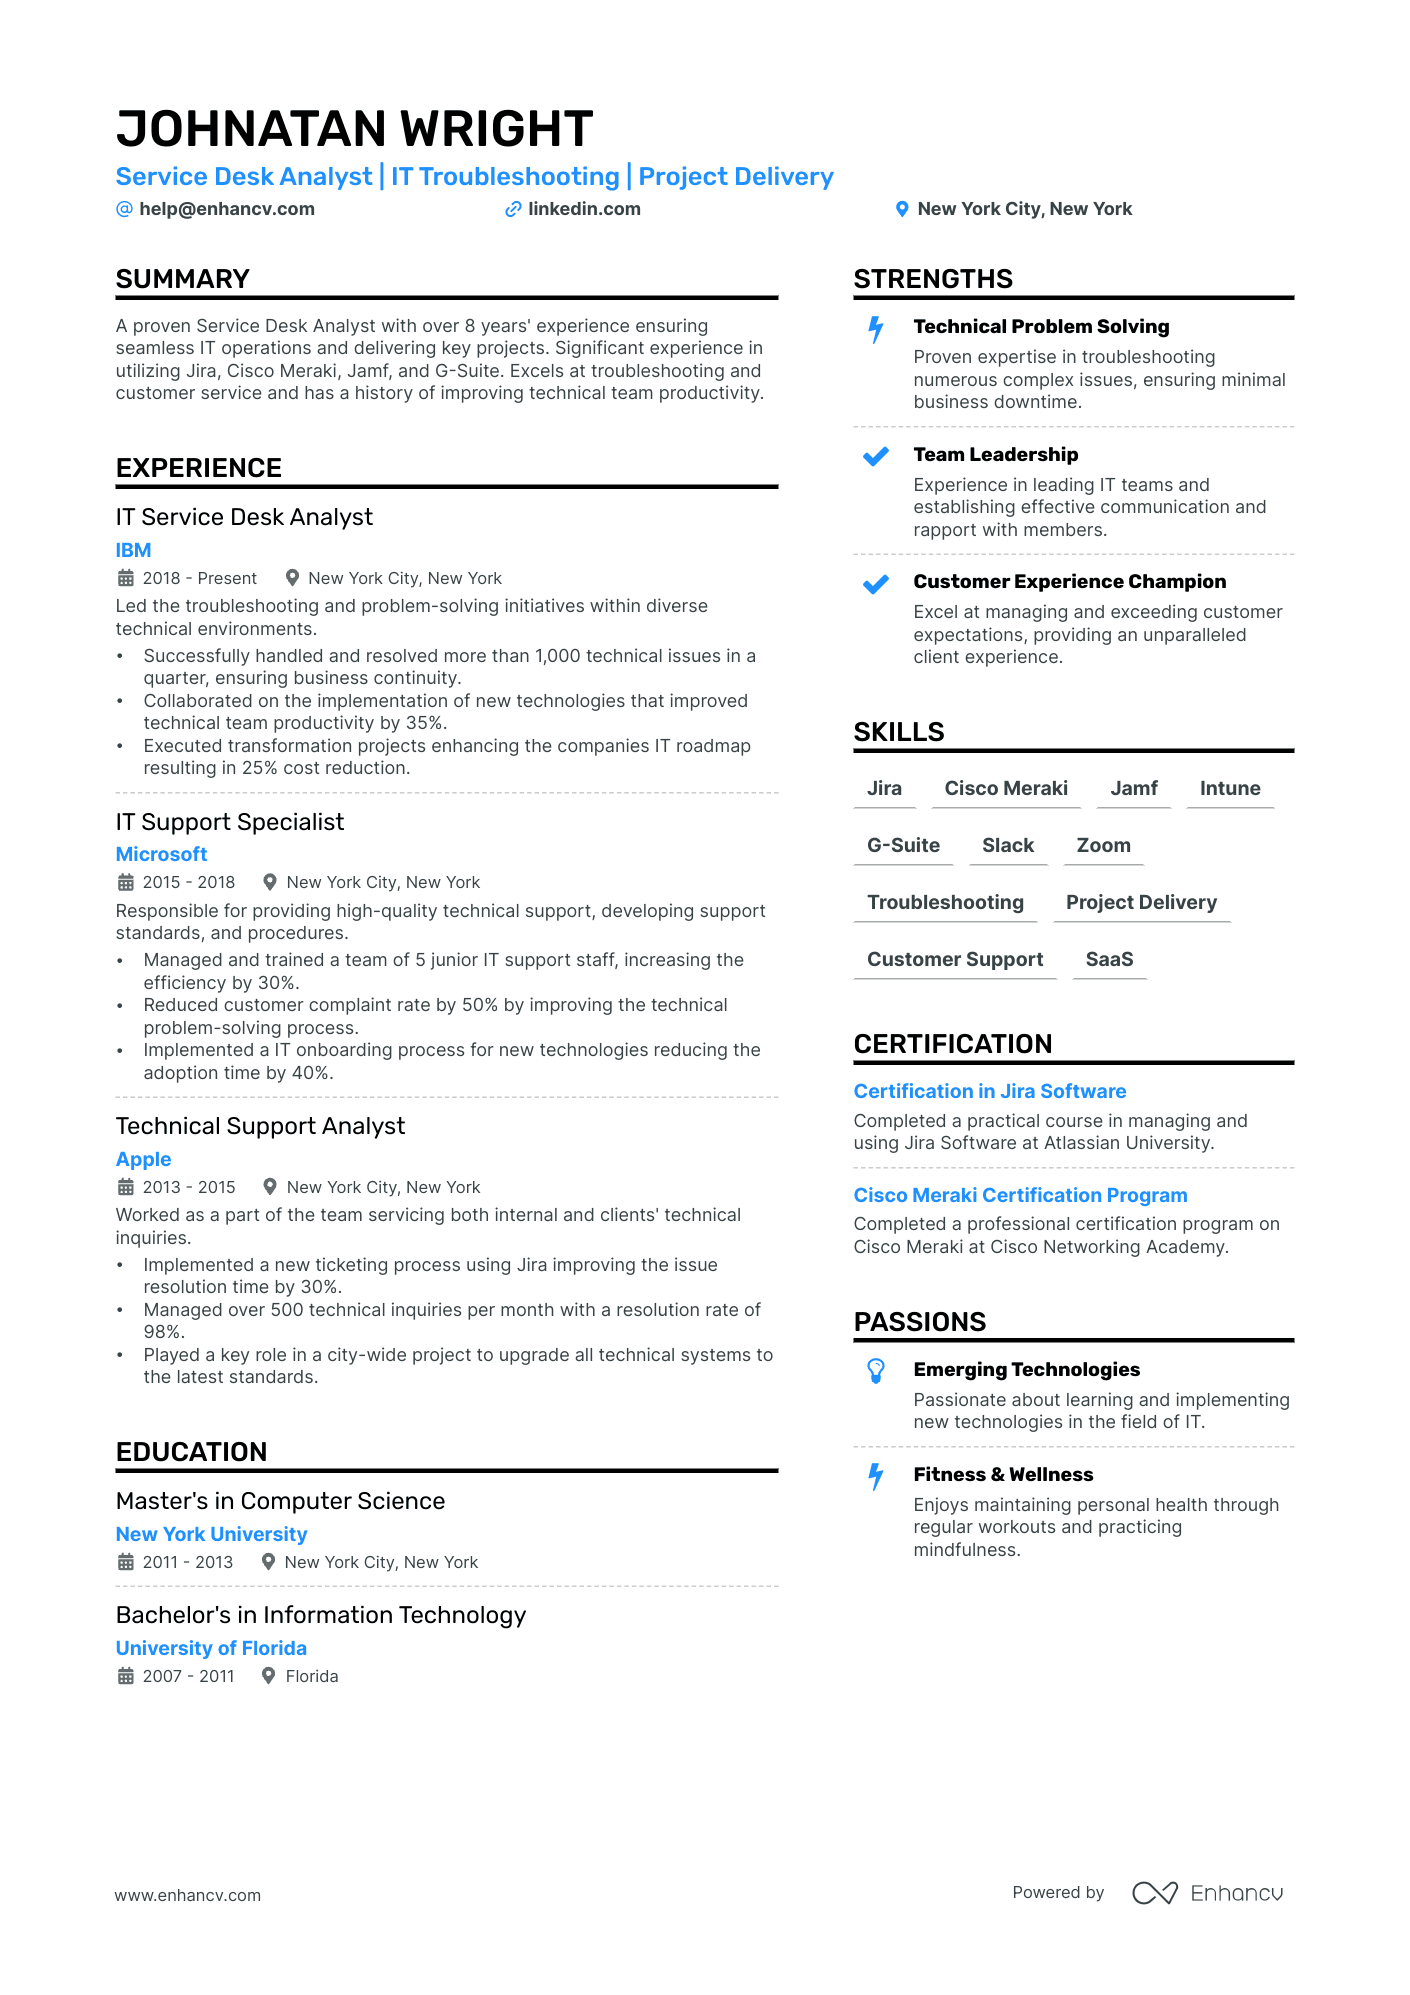 Service Desk Analyst resume example